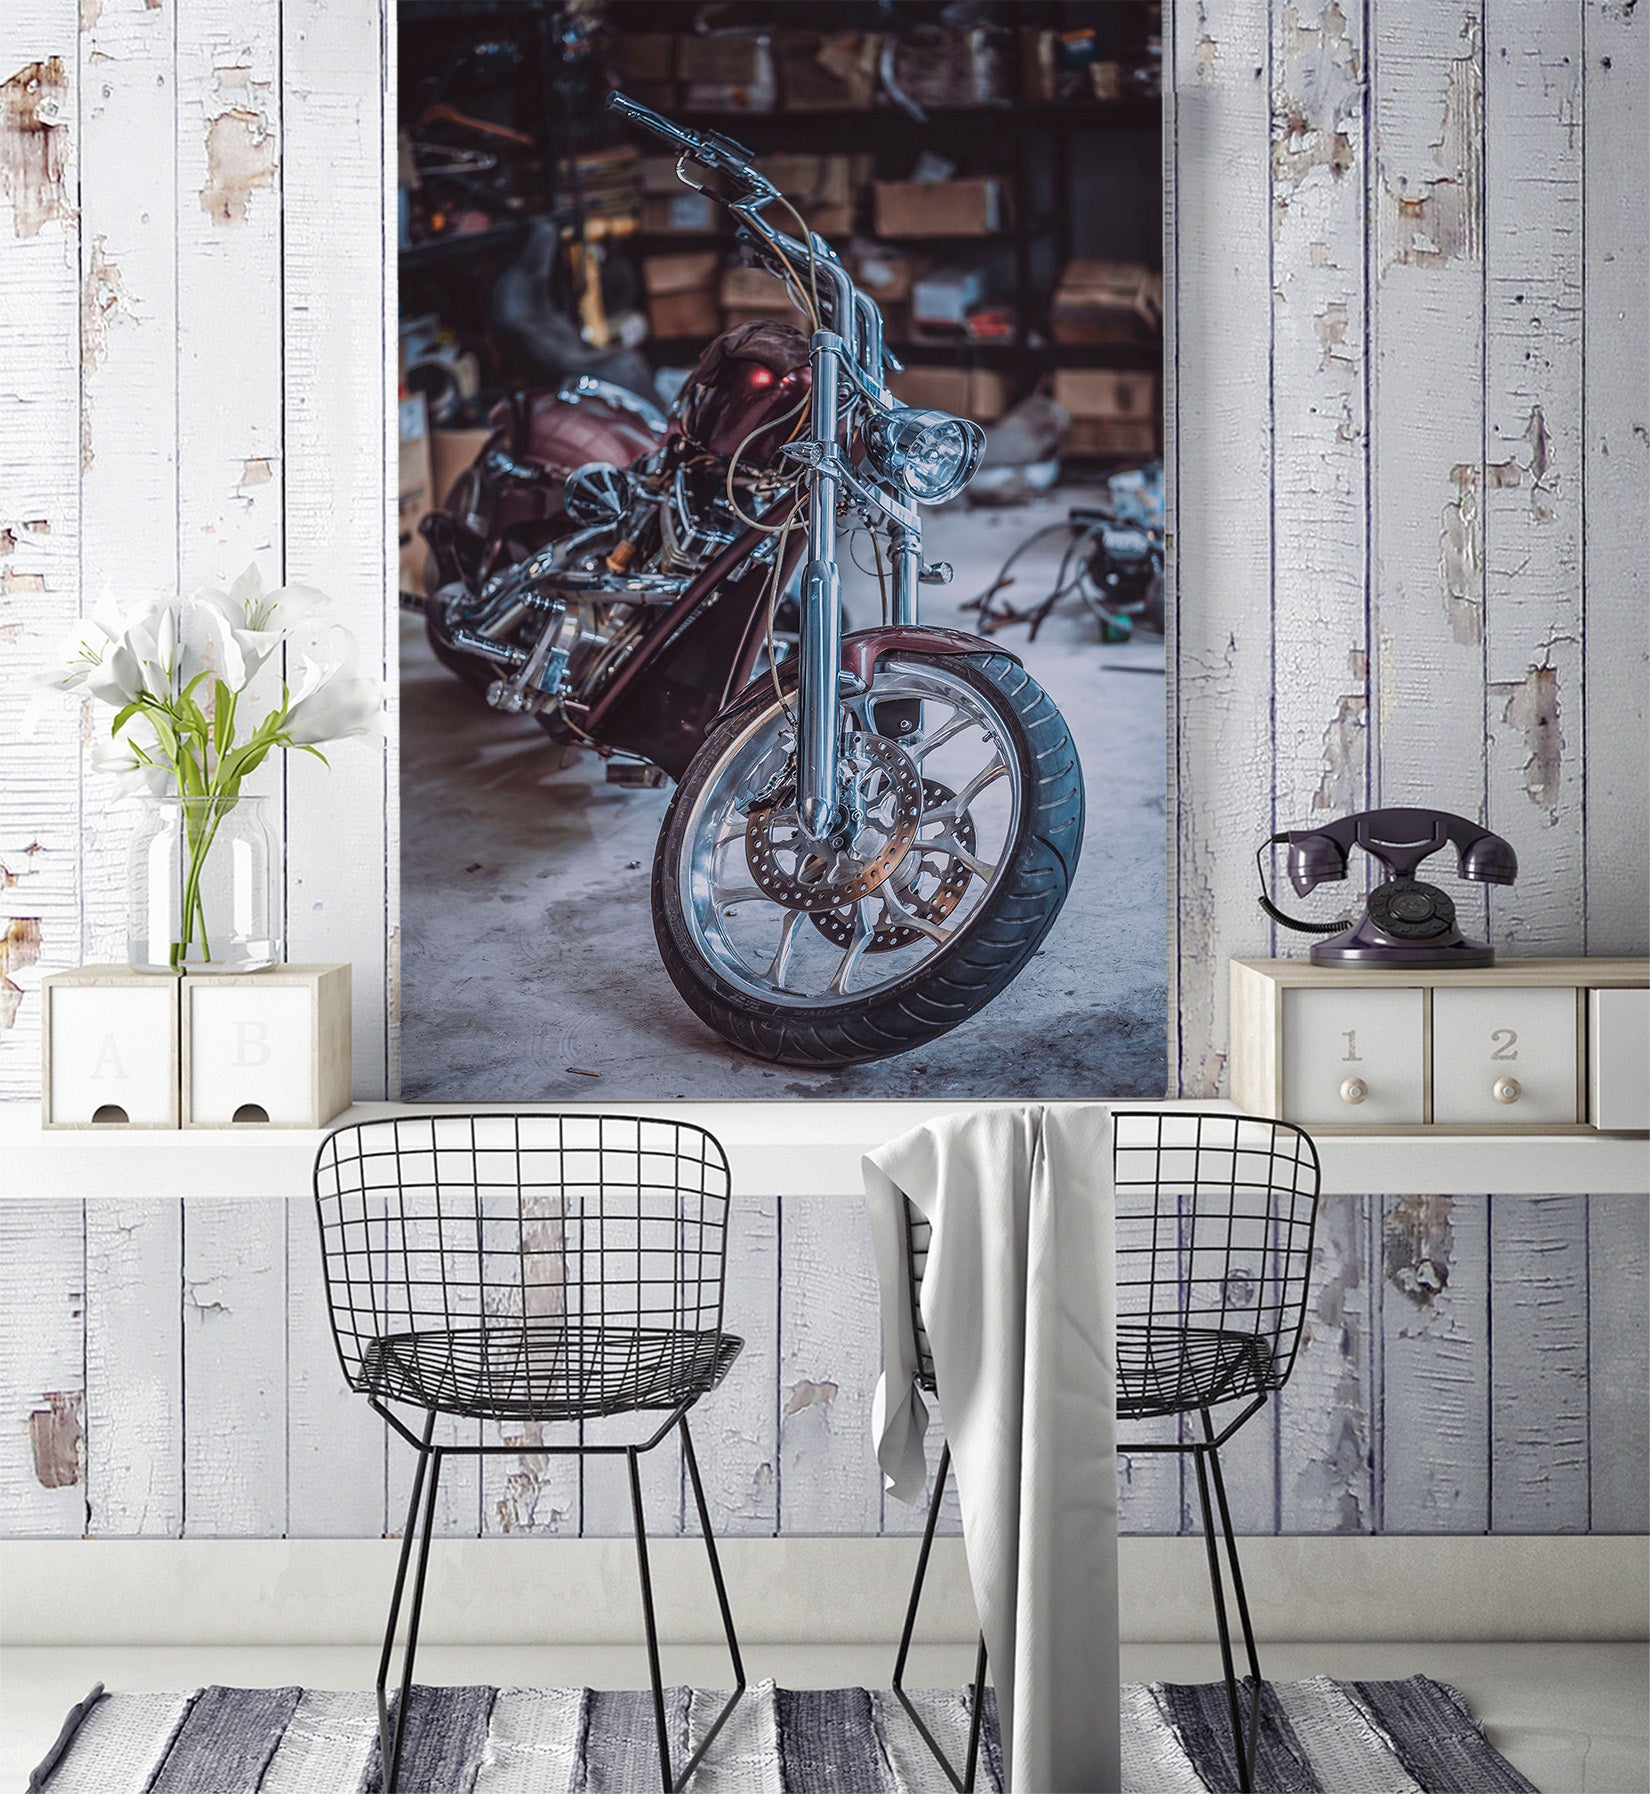 3D Luxury Motorcycle 422 Vehicle Wall Murals